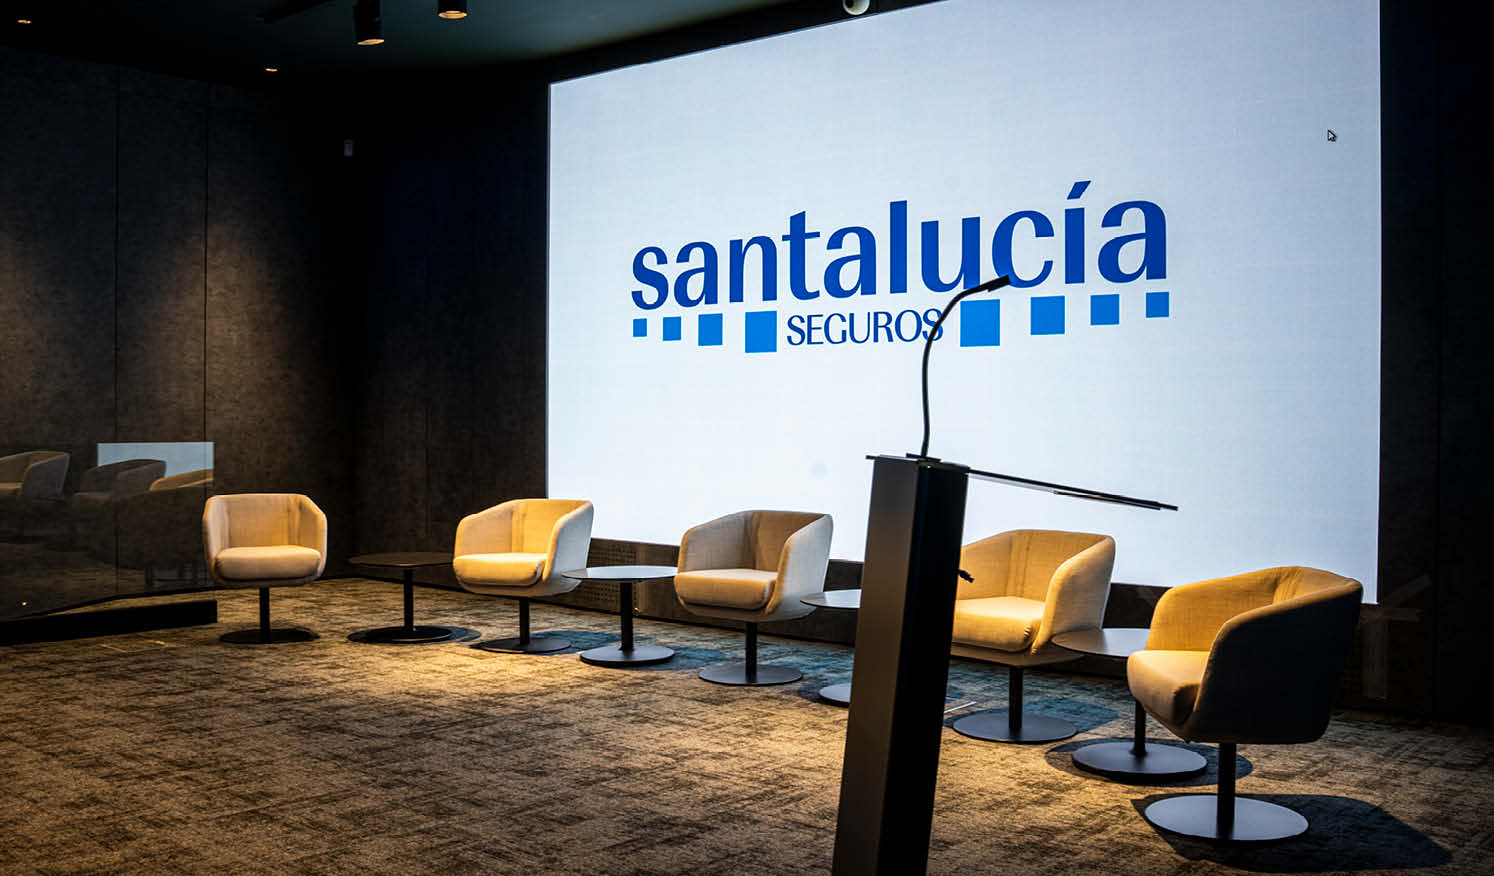 Santalucía_Auditorio en edificio de oficinas, proyecto Design&Build de salón de actos corporativo